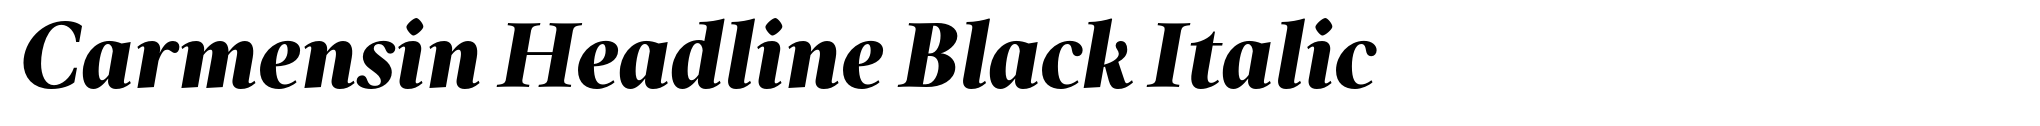 Carmensin Headline Black Italic image